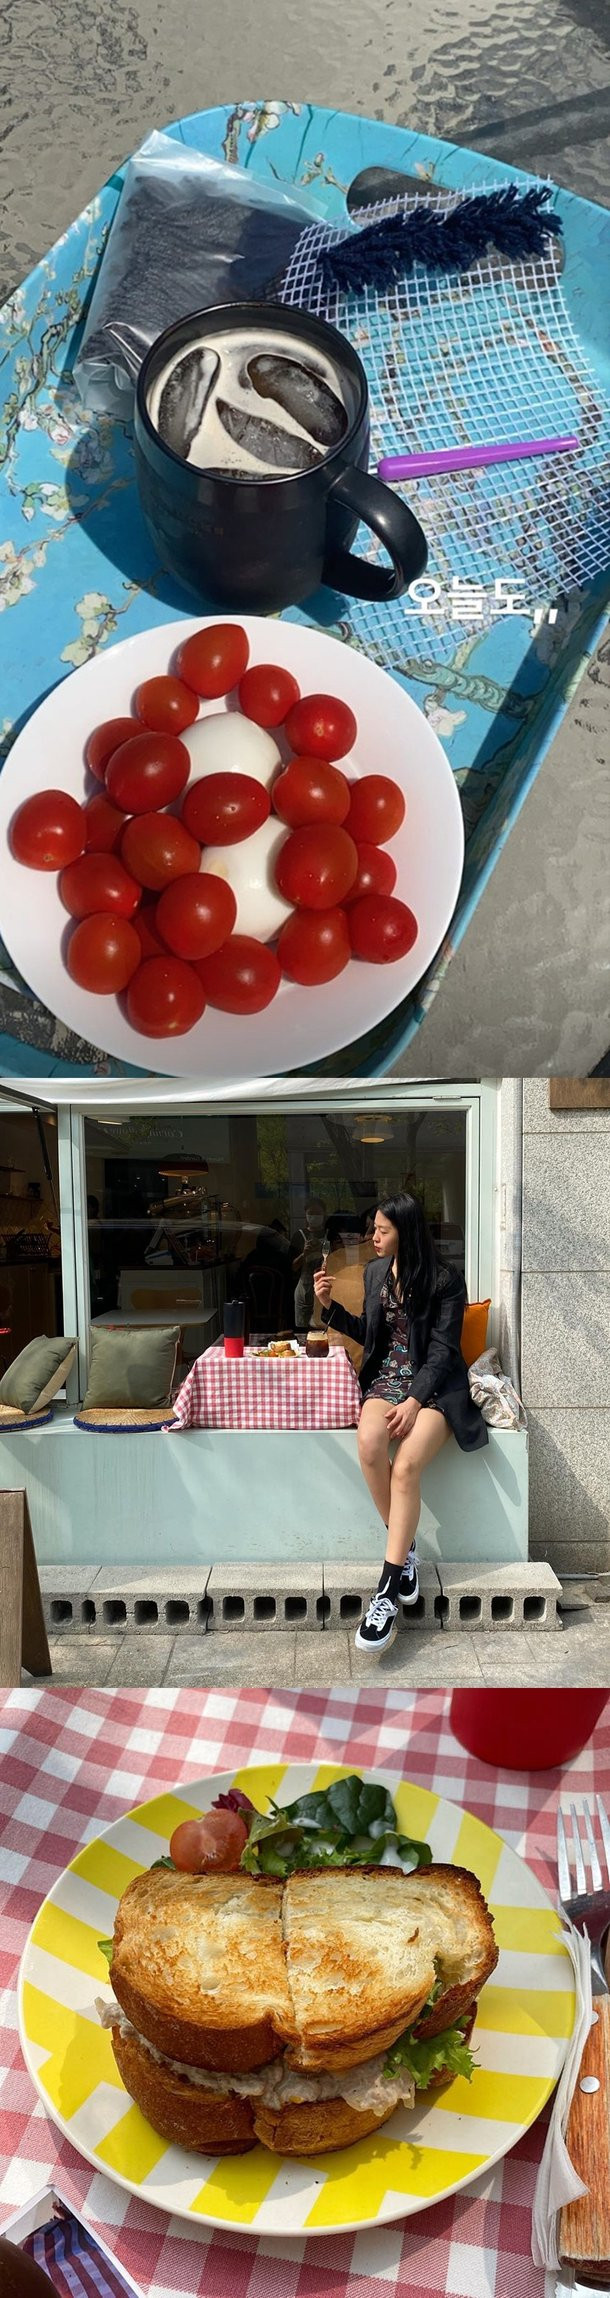 aoa-seolhyun-shares-her-diet-meals-on-instagram-1